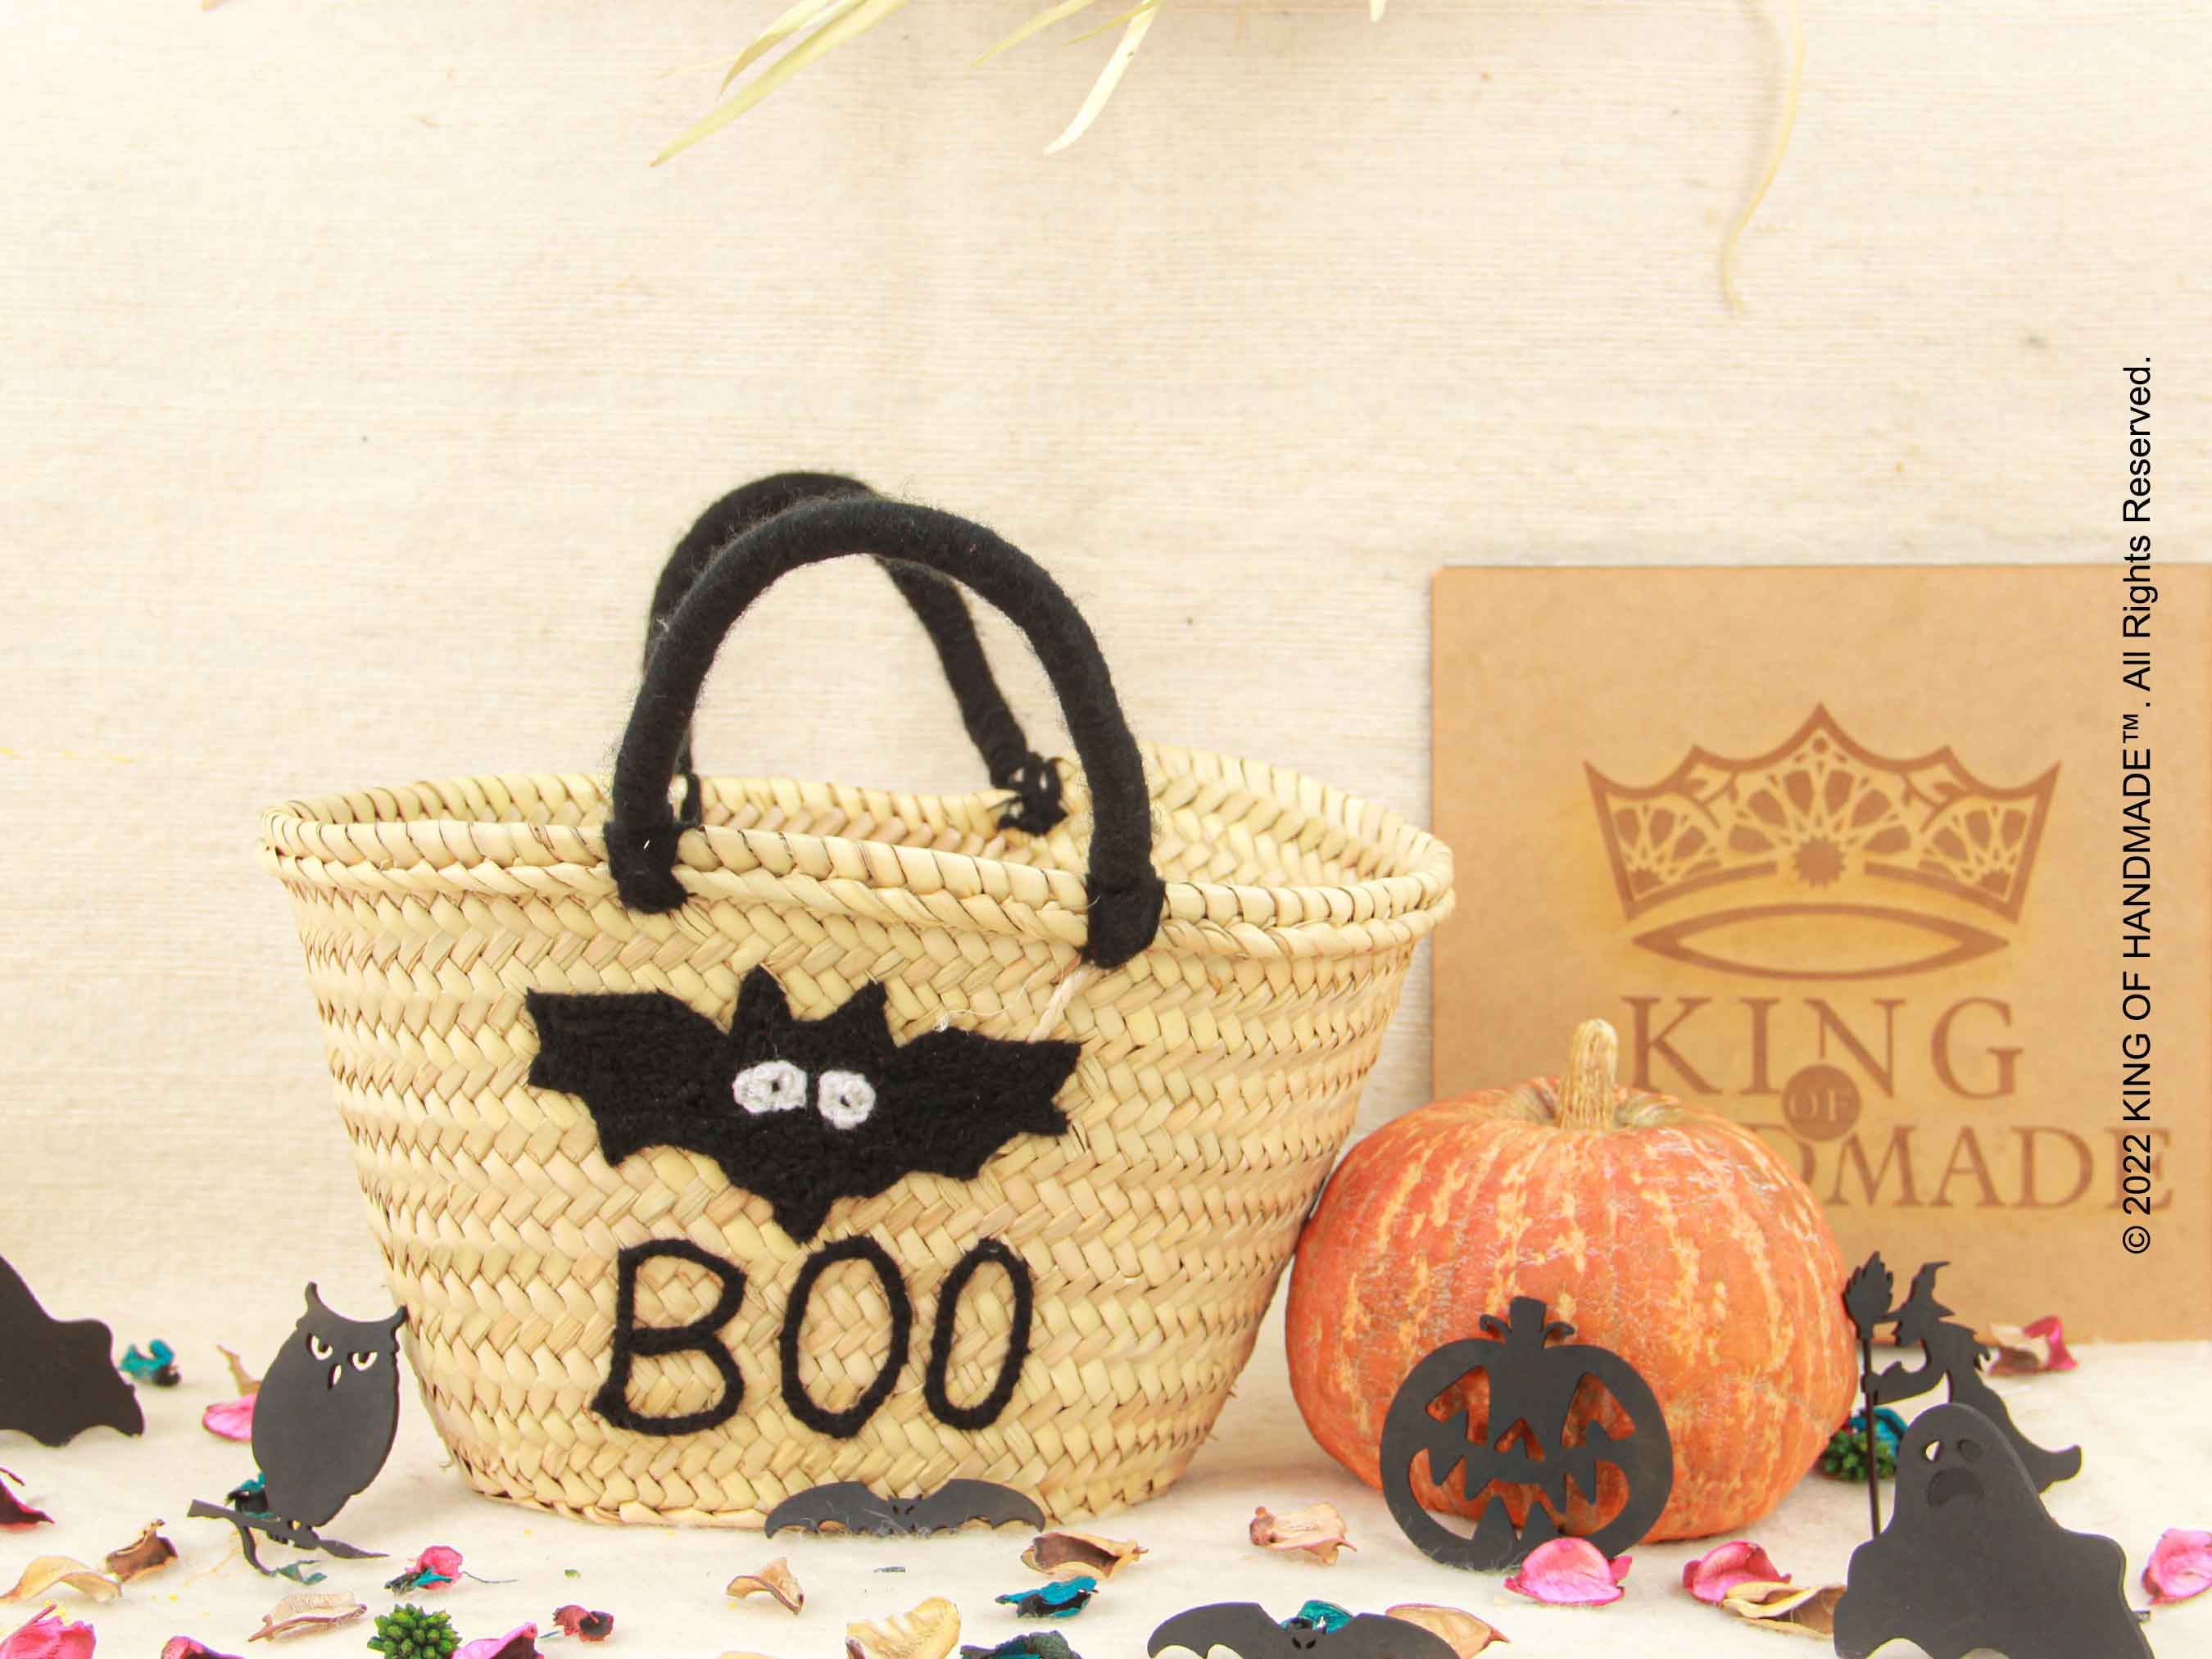 Boo! Halloween Bat Basket - Personalized